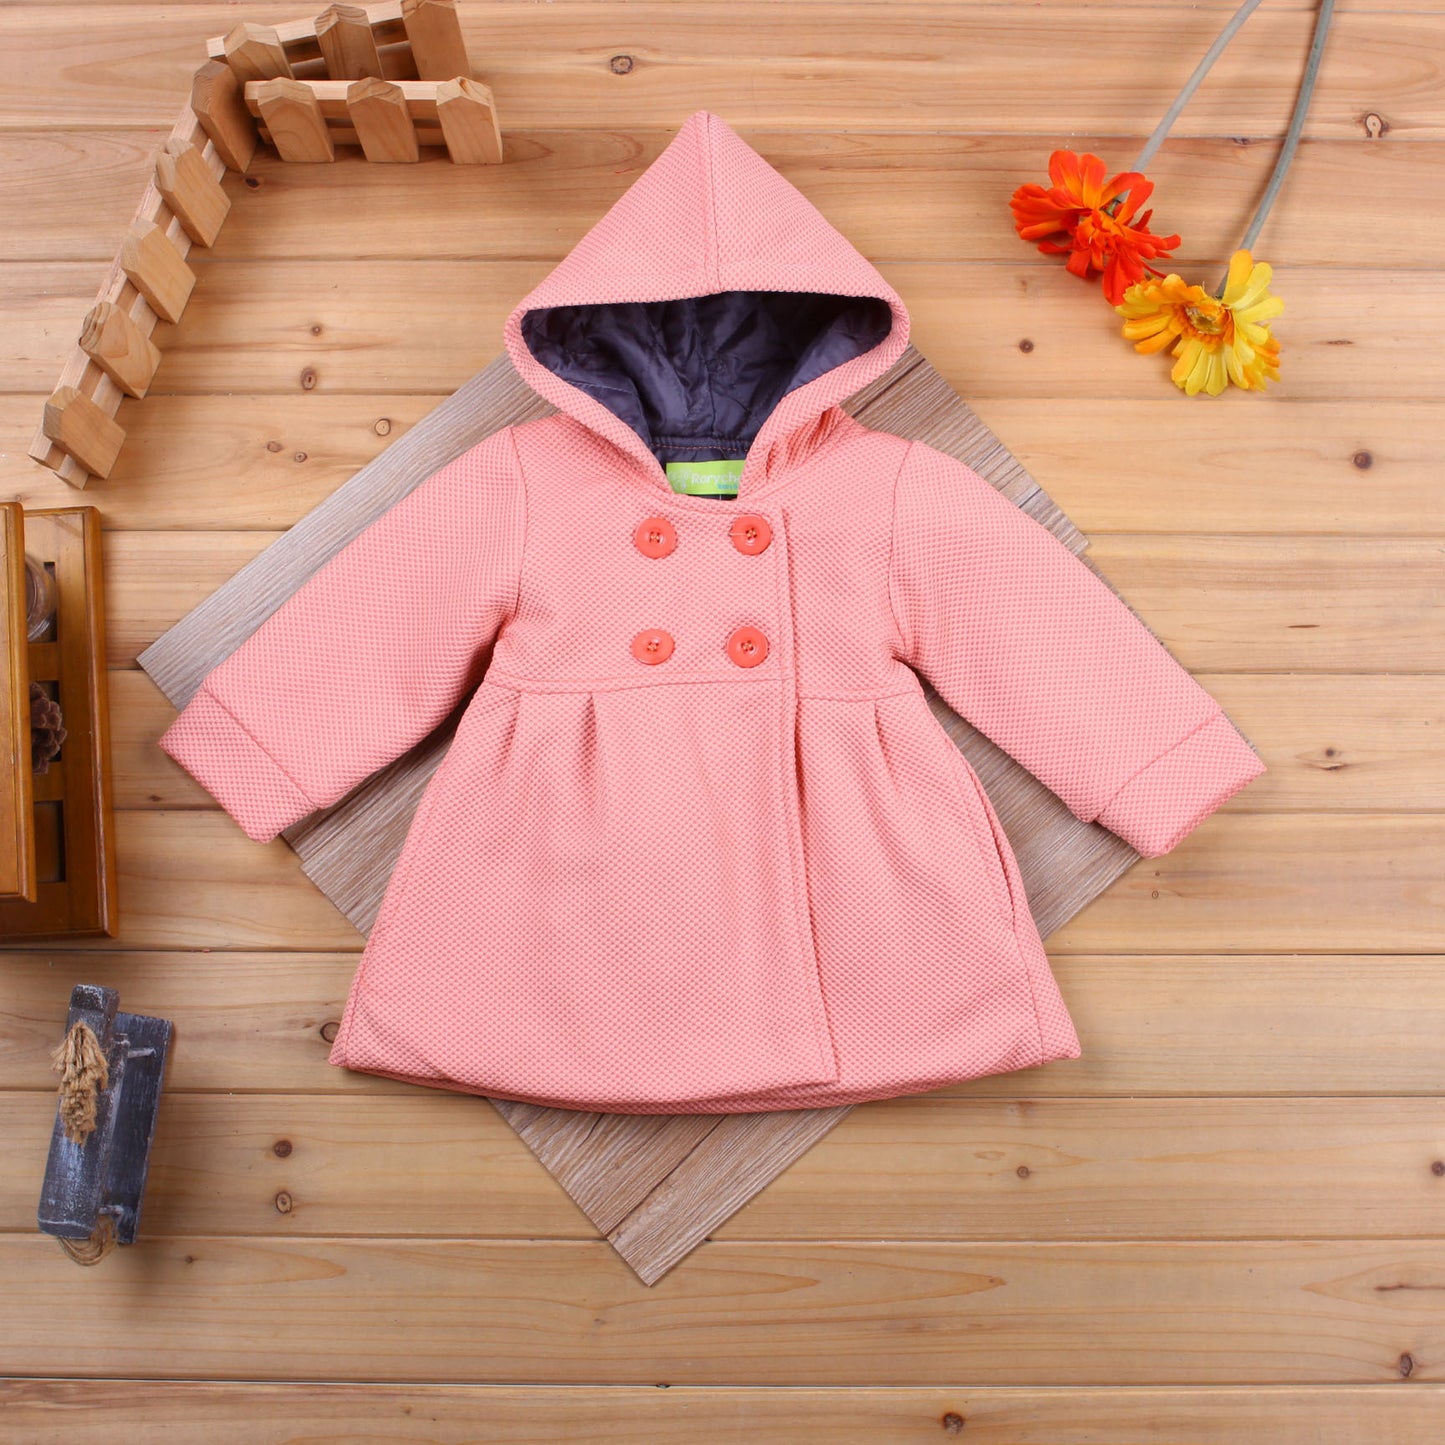 Kiethleen Winter Coat | Winter new little girl child Korean version of the baby wear warm coat hooded jacket 3 colors